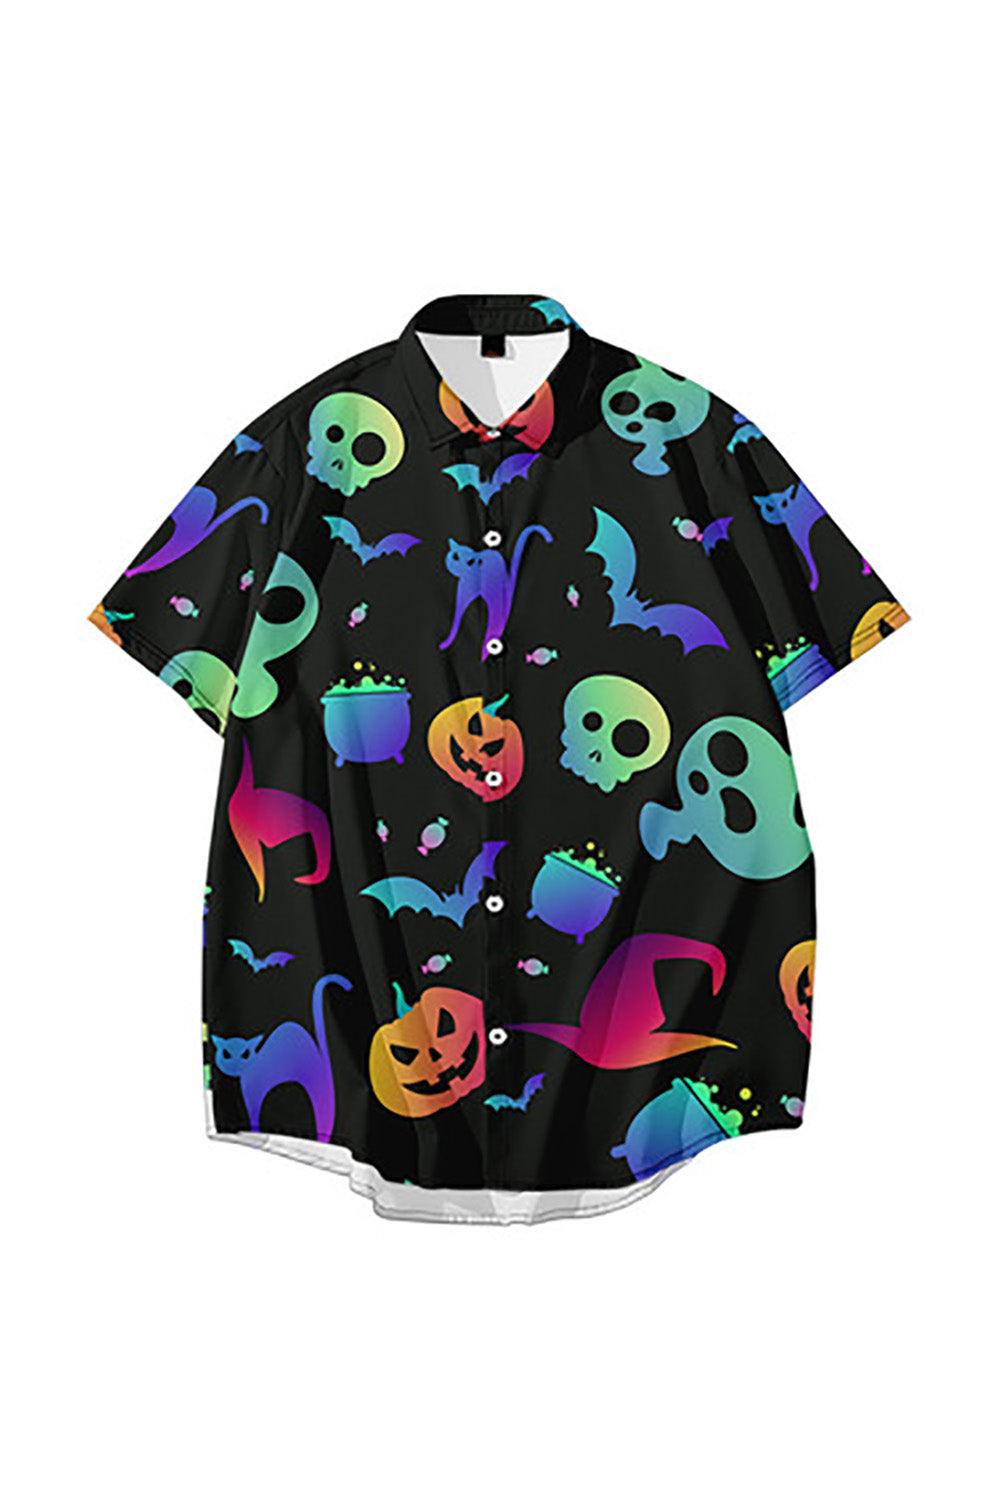 Halloween Graphic Print Button Up Men's Shirt - L & M Kee, LLC